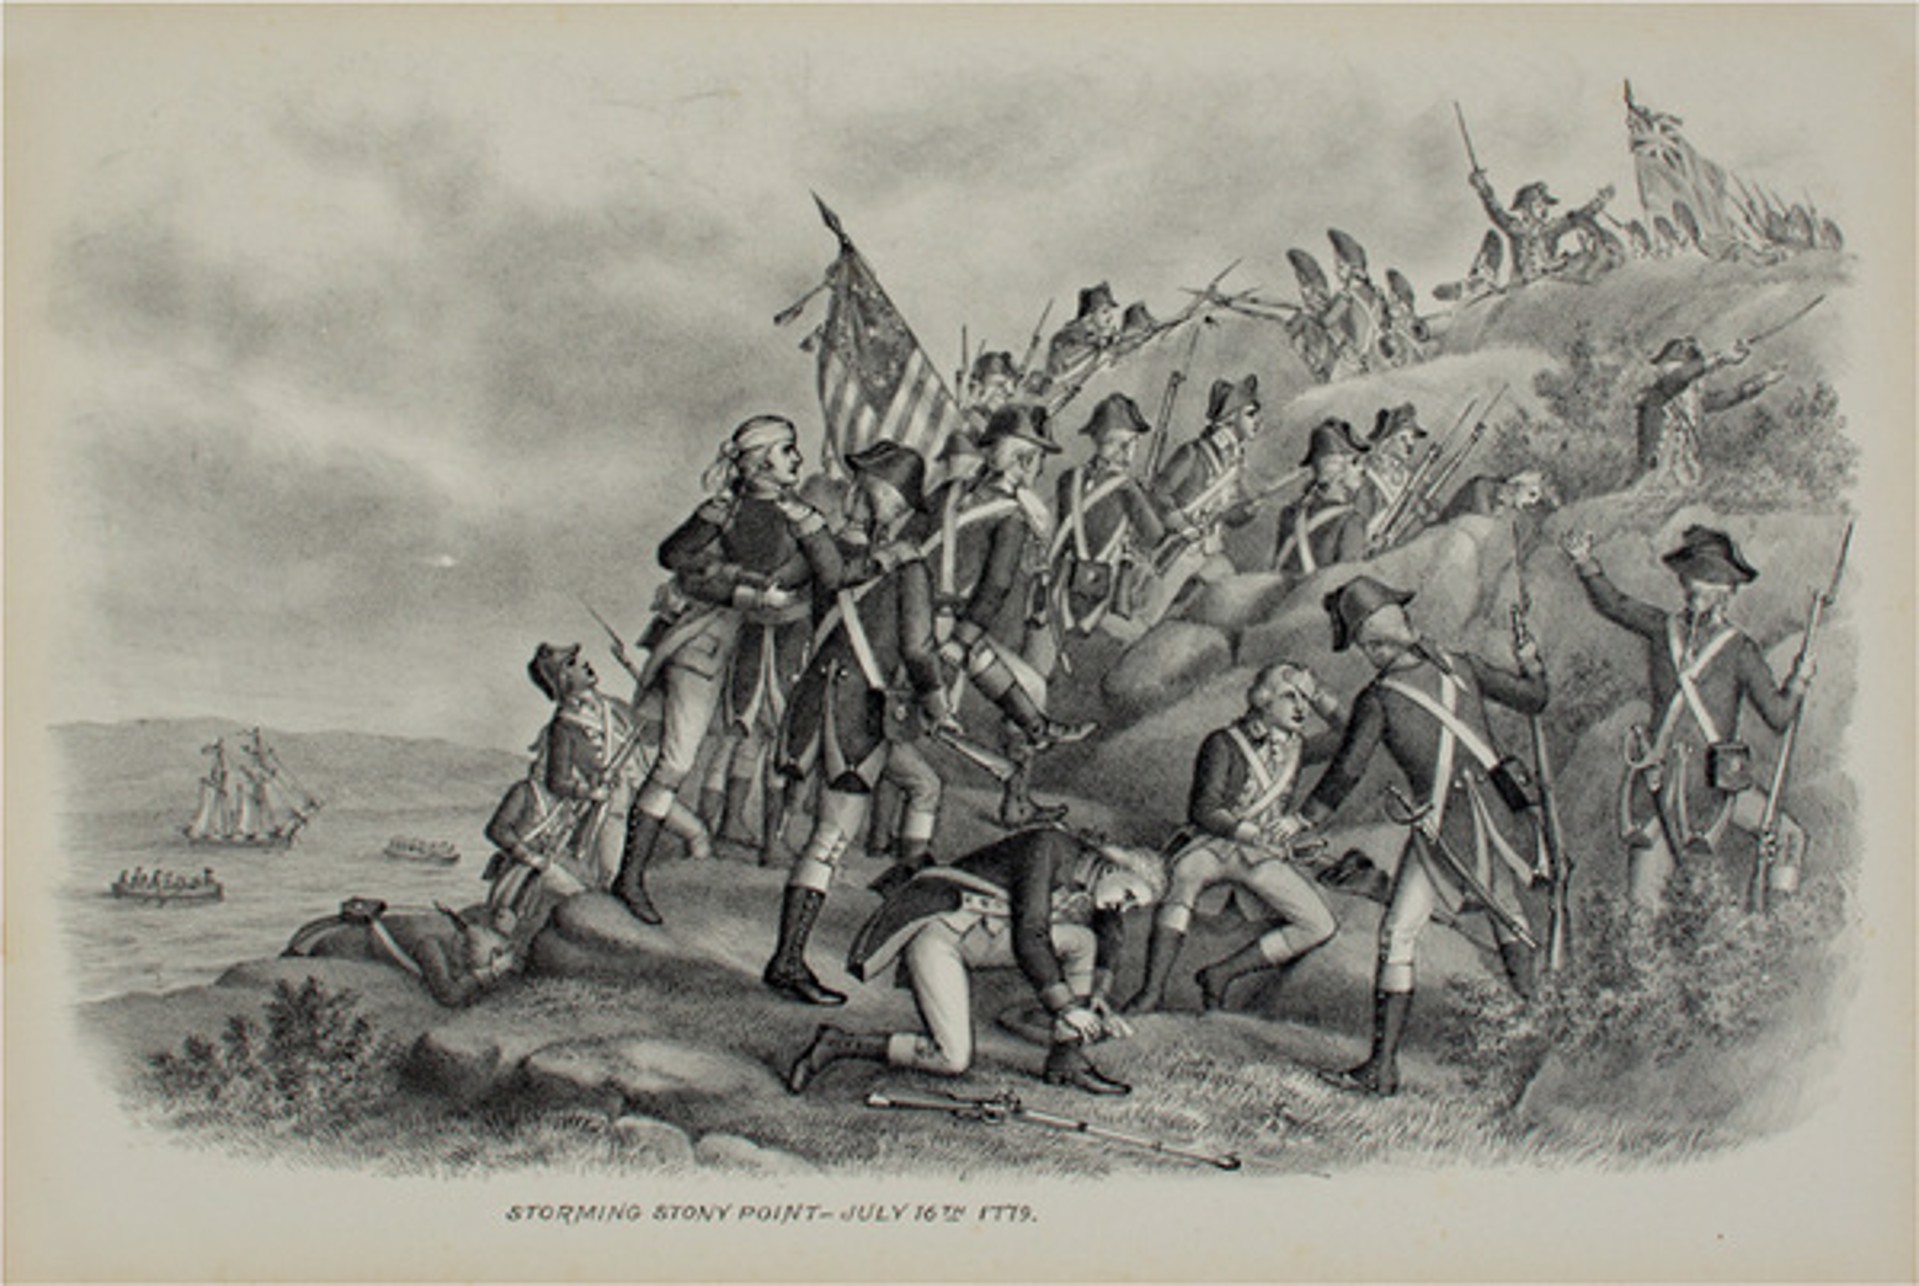 Storming Stony Point, July 16, 1779 by Kurz & Allison